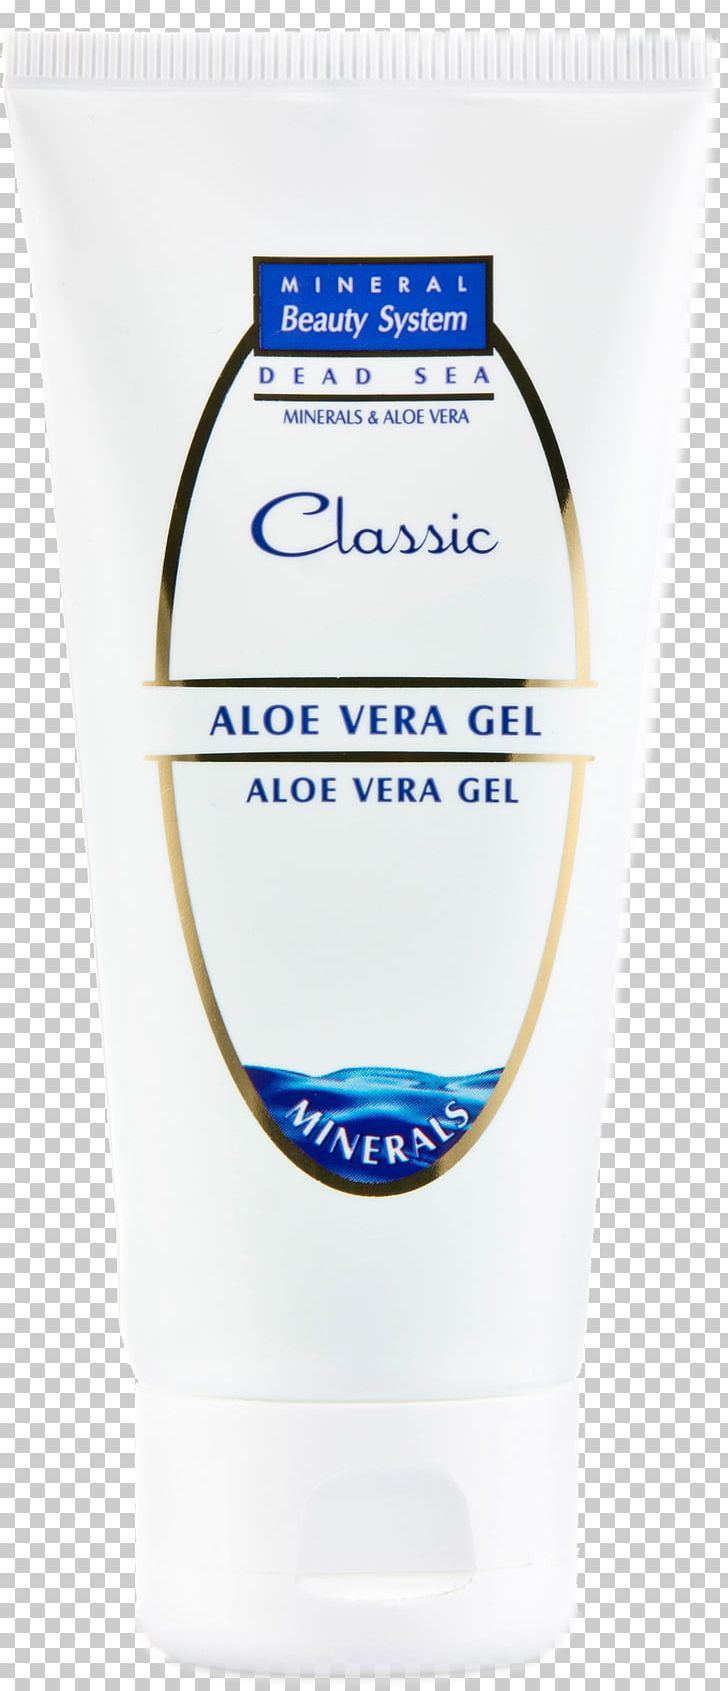 Cream Product PNG, Clipart, Aloe, Aloe Vera, Aloe Vera Gel, Cream, Dead Sea Products Free PNG Download